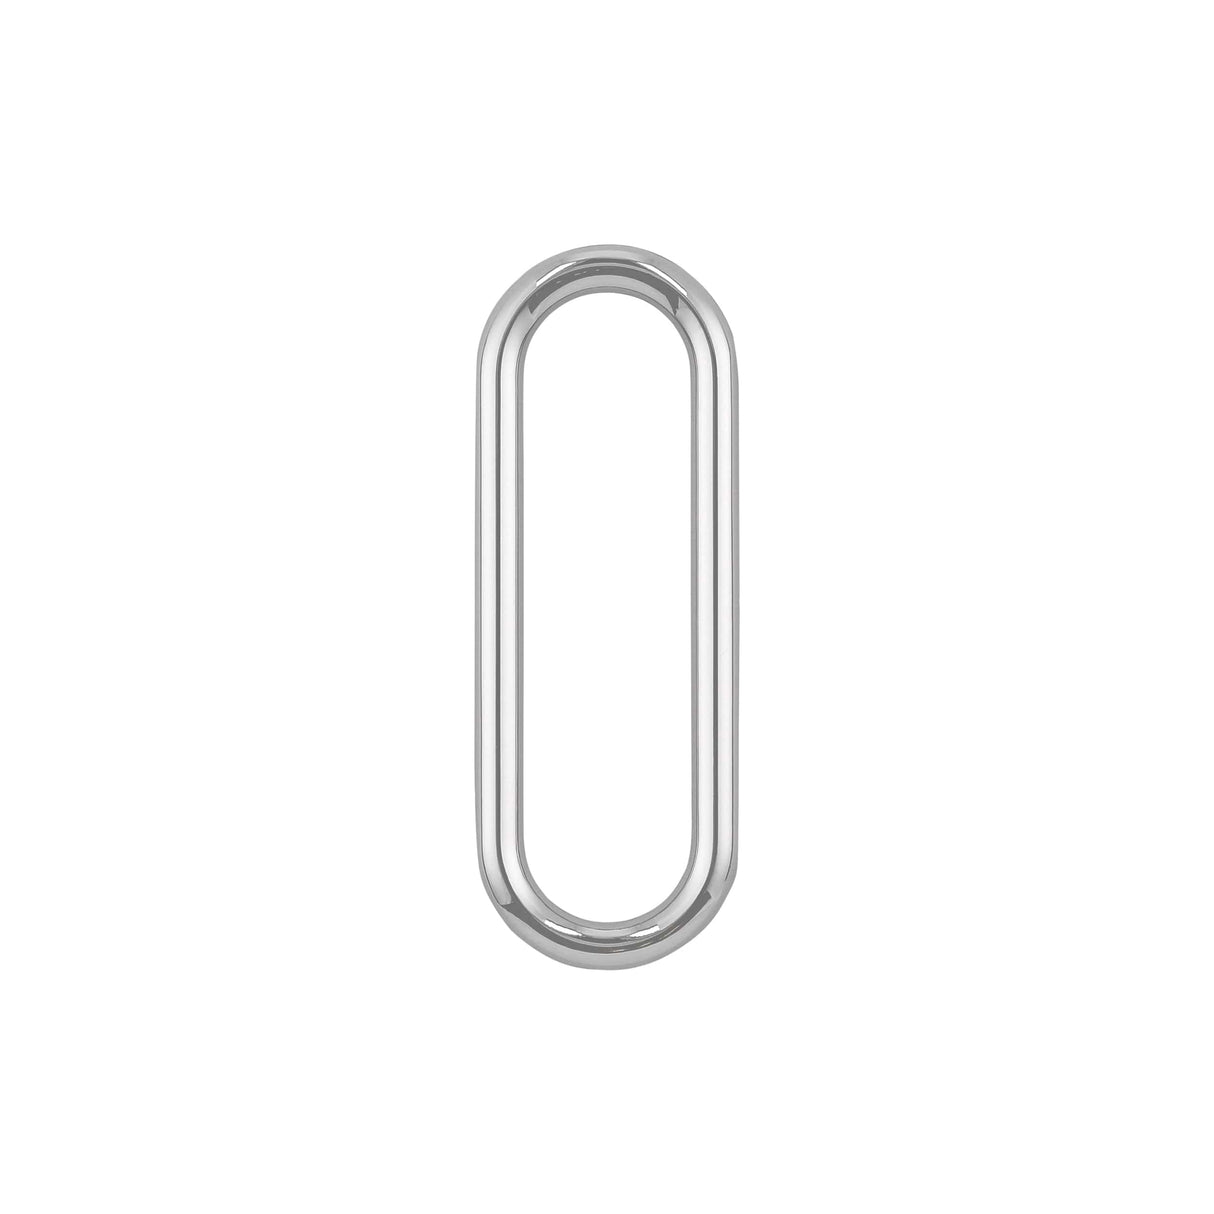 Ohio Travel Bag Rings & Slides 1 1/2" Shiny Nickel, Oval Ring, Zinc Alloy-PK5, #P-3036-NIC P-3036-NIC